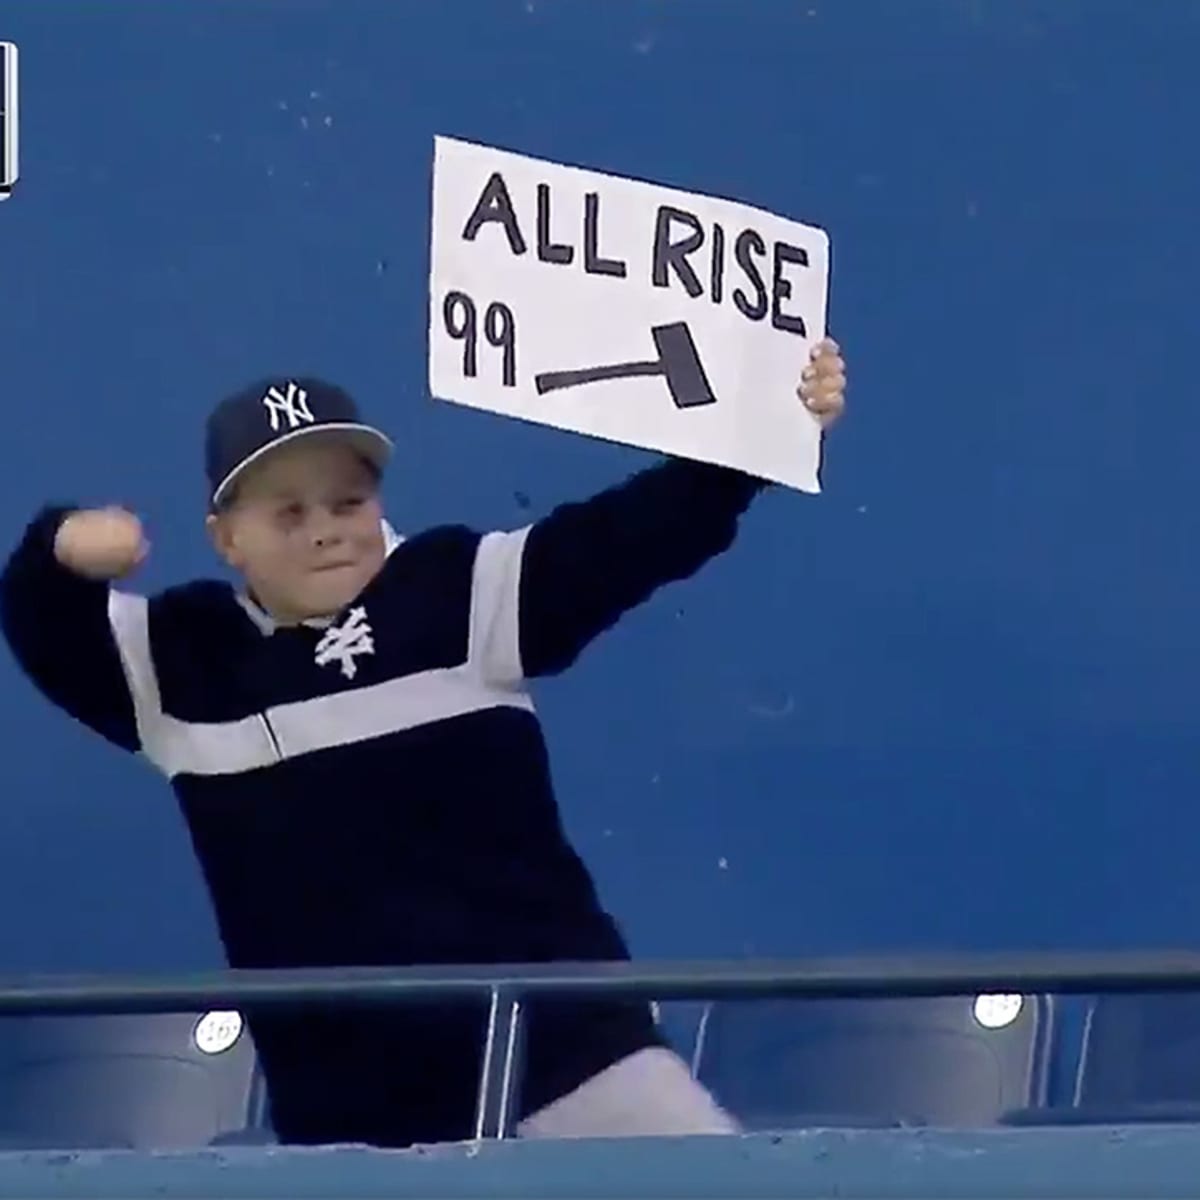 Yankees: Aaron Judge home run makes kid's day in Toronto - Sports